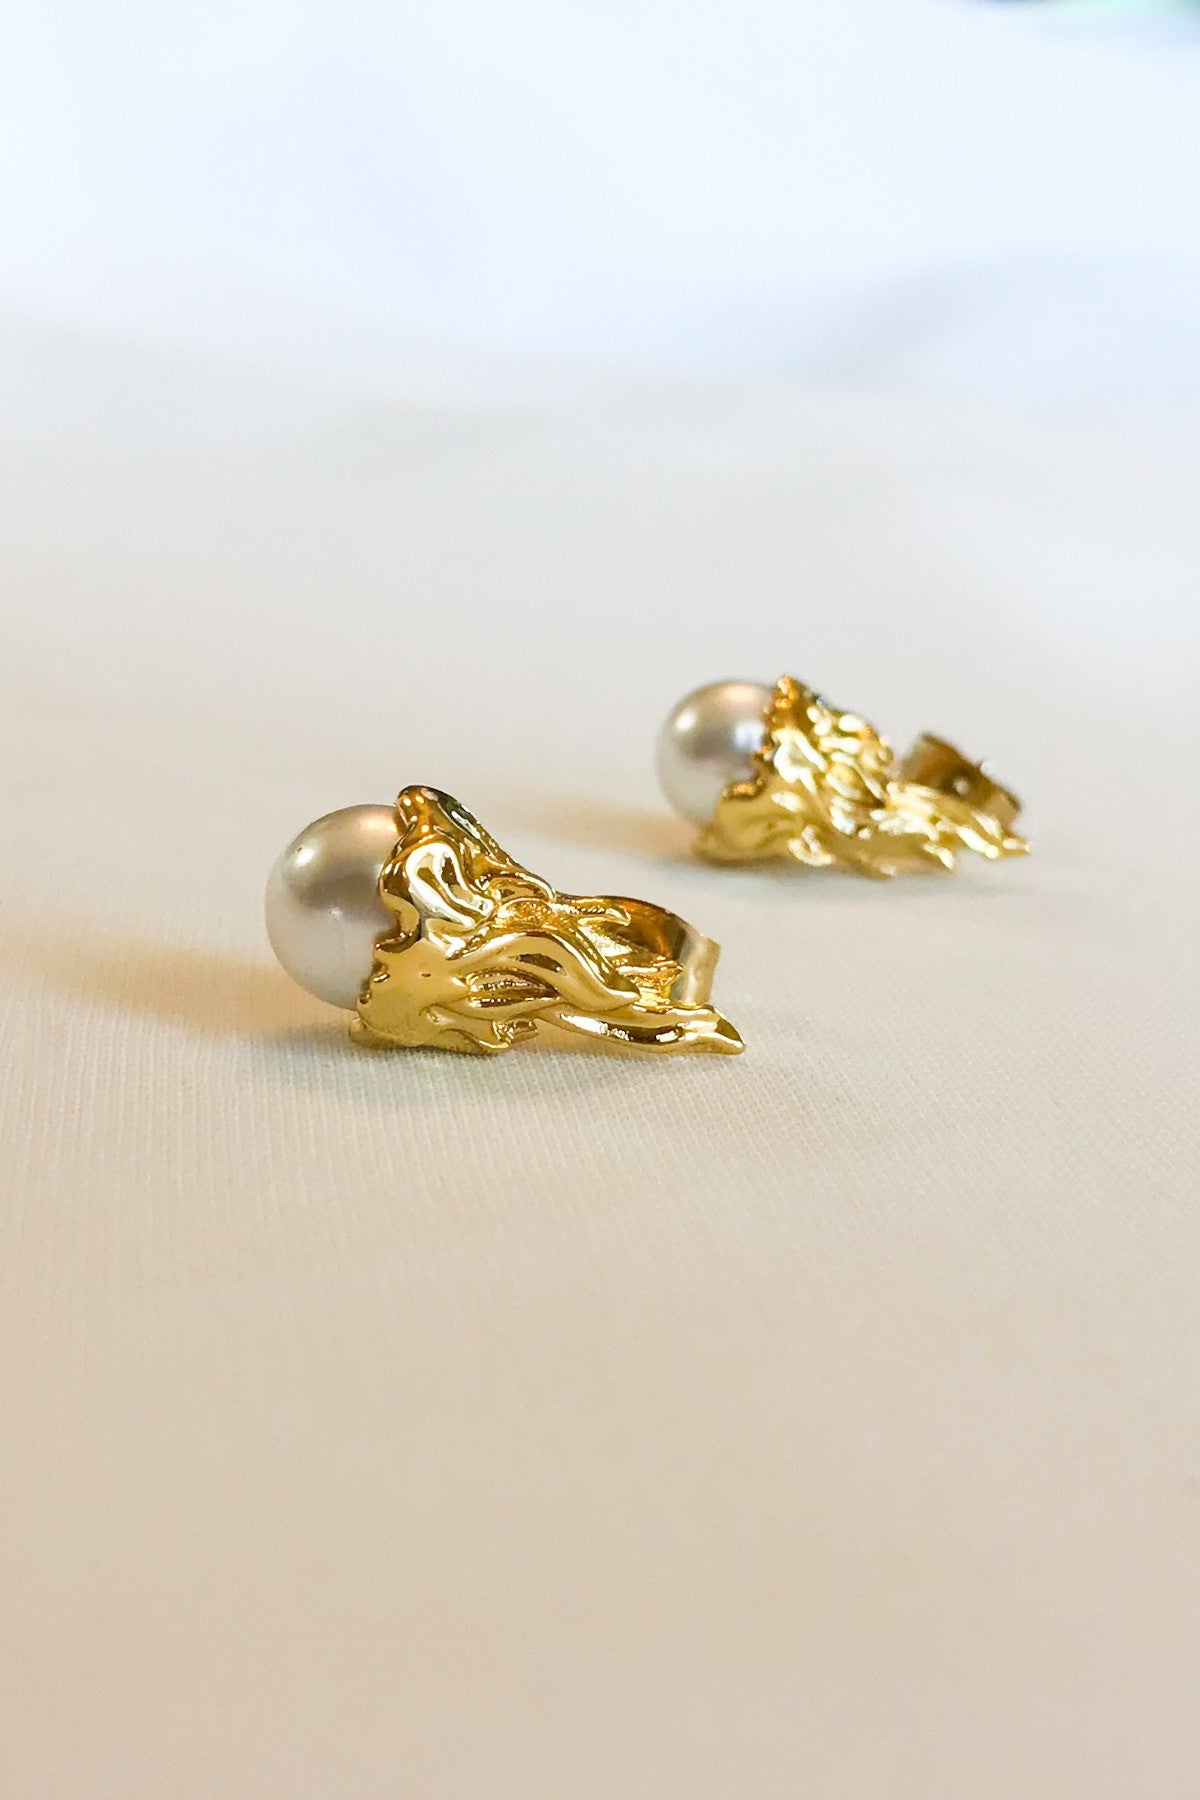 SKYE San Francisco SF shop ethical sustainable modern minimalist luxury women jewelry Spring 2020 Megève 18K Gold Pearl Stud Earrings 2